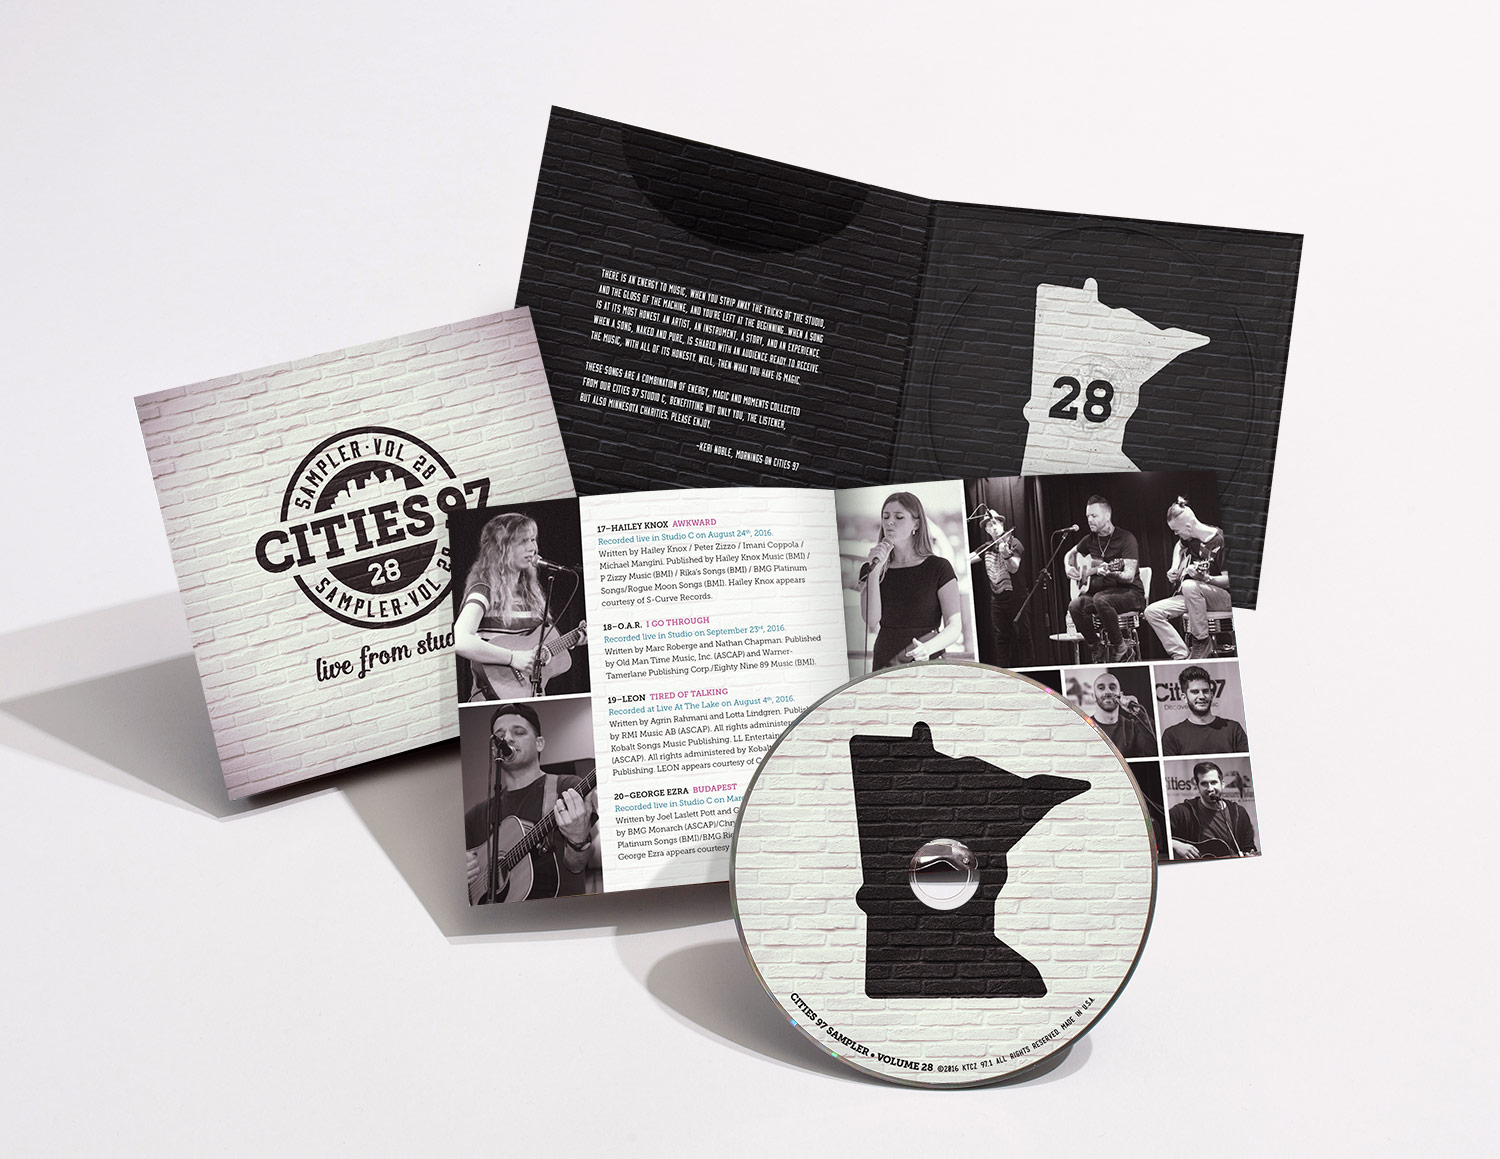 Cities 97 Sampler Volume 28 Album Packaging